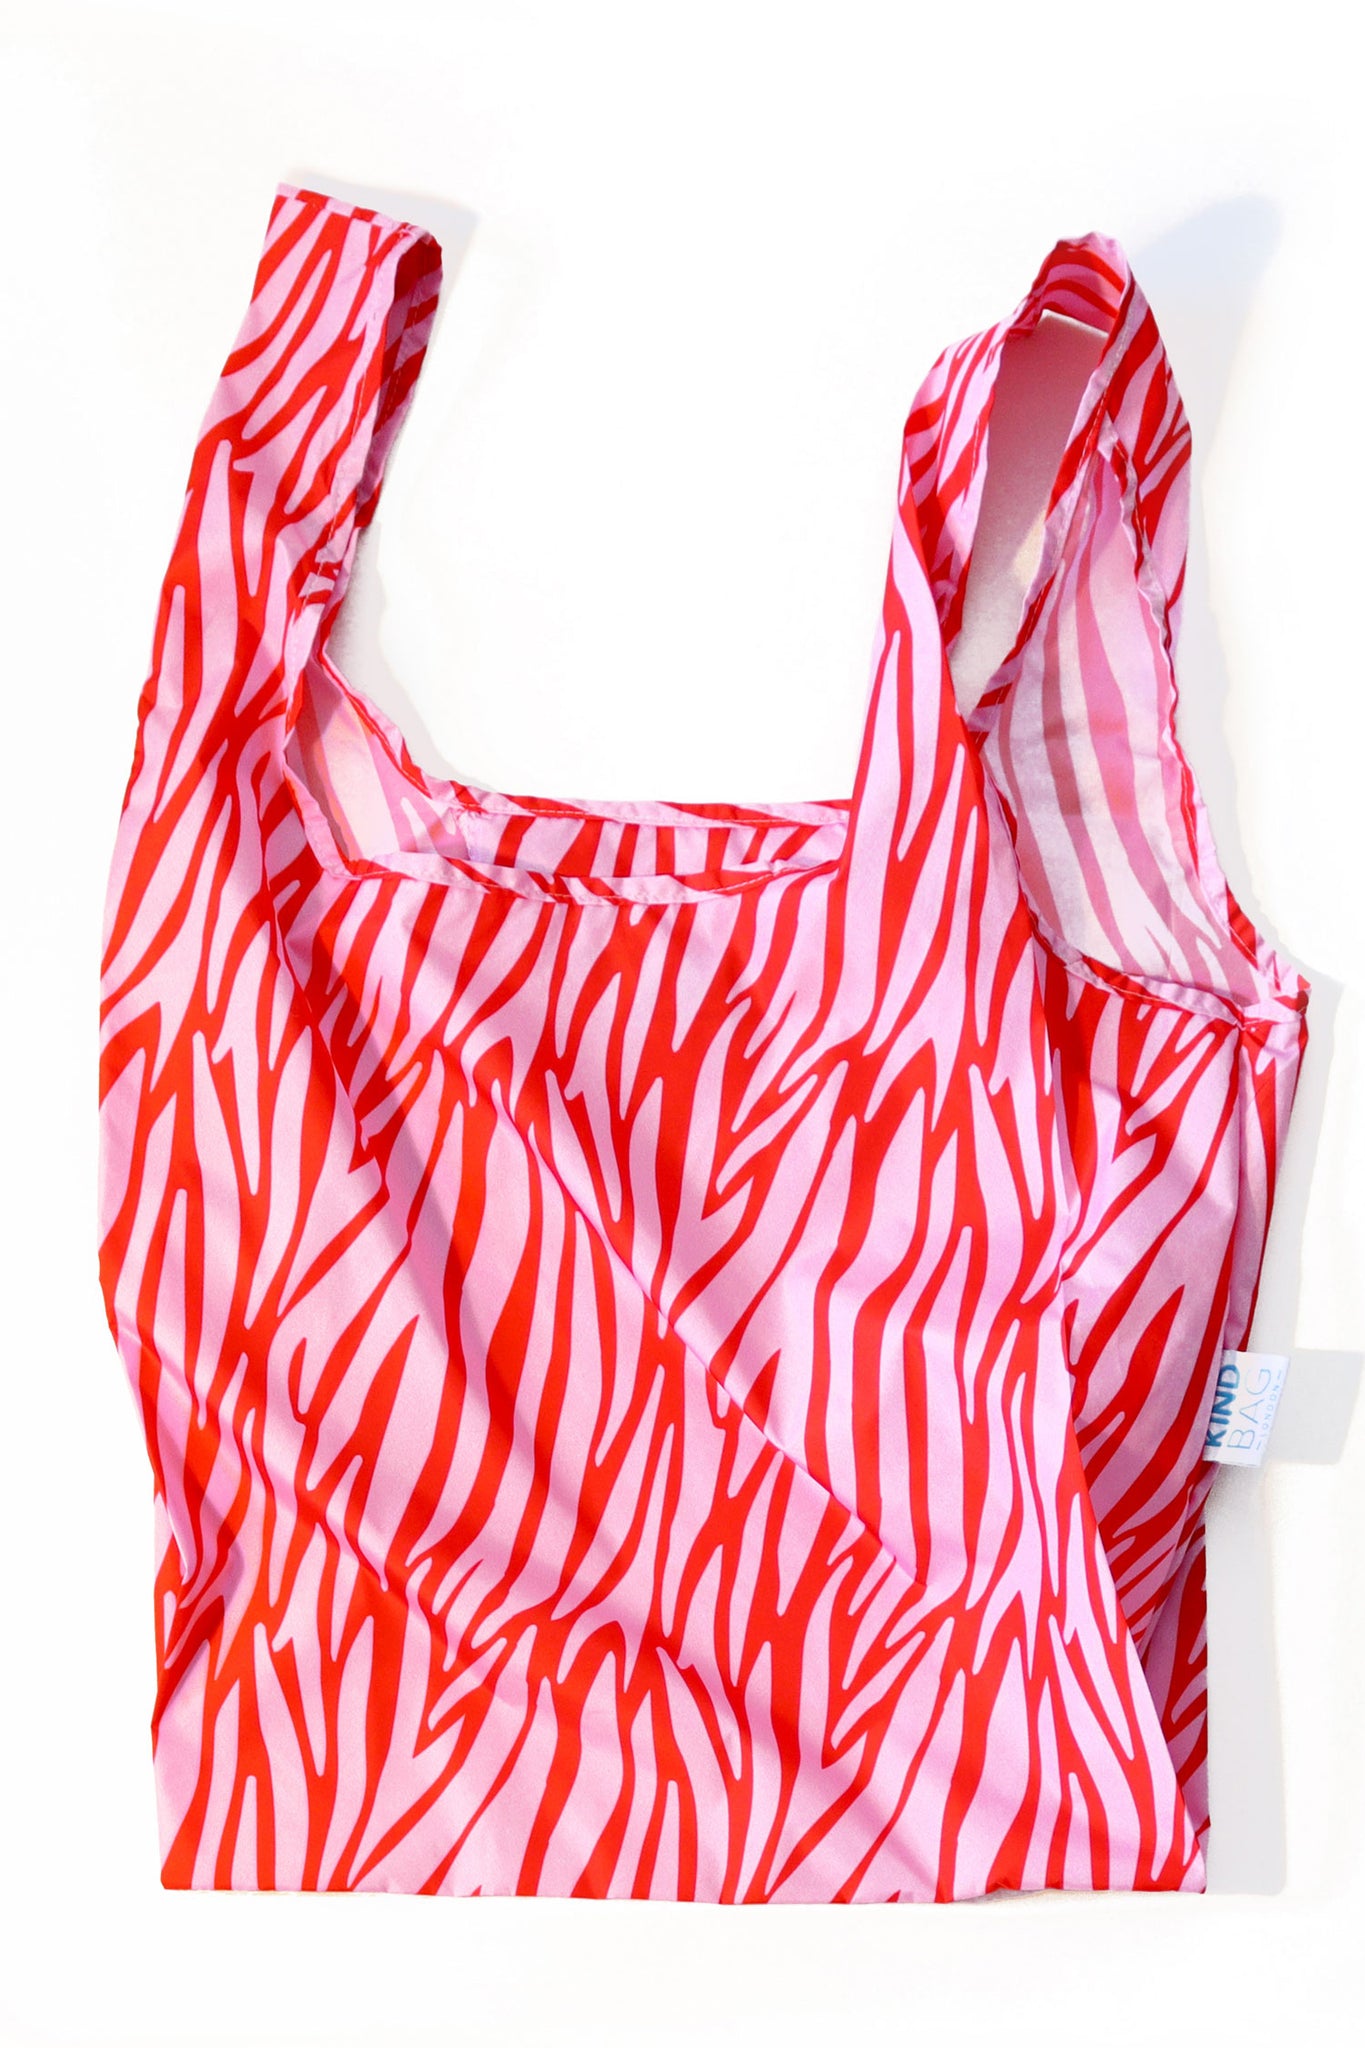 Reusable Kind Bag Zebra Print | Eco Bags – Feather and Nest